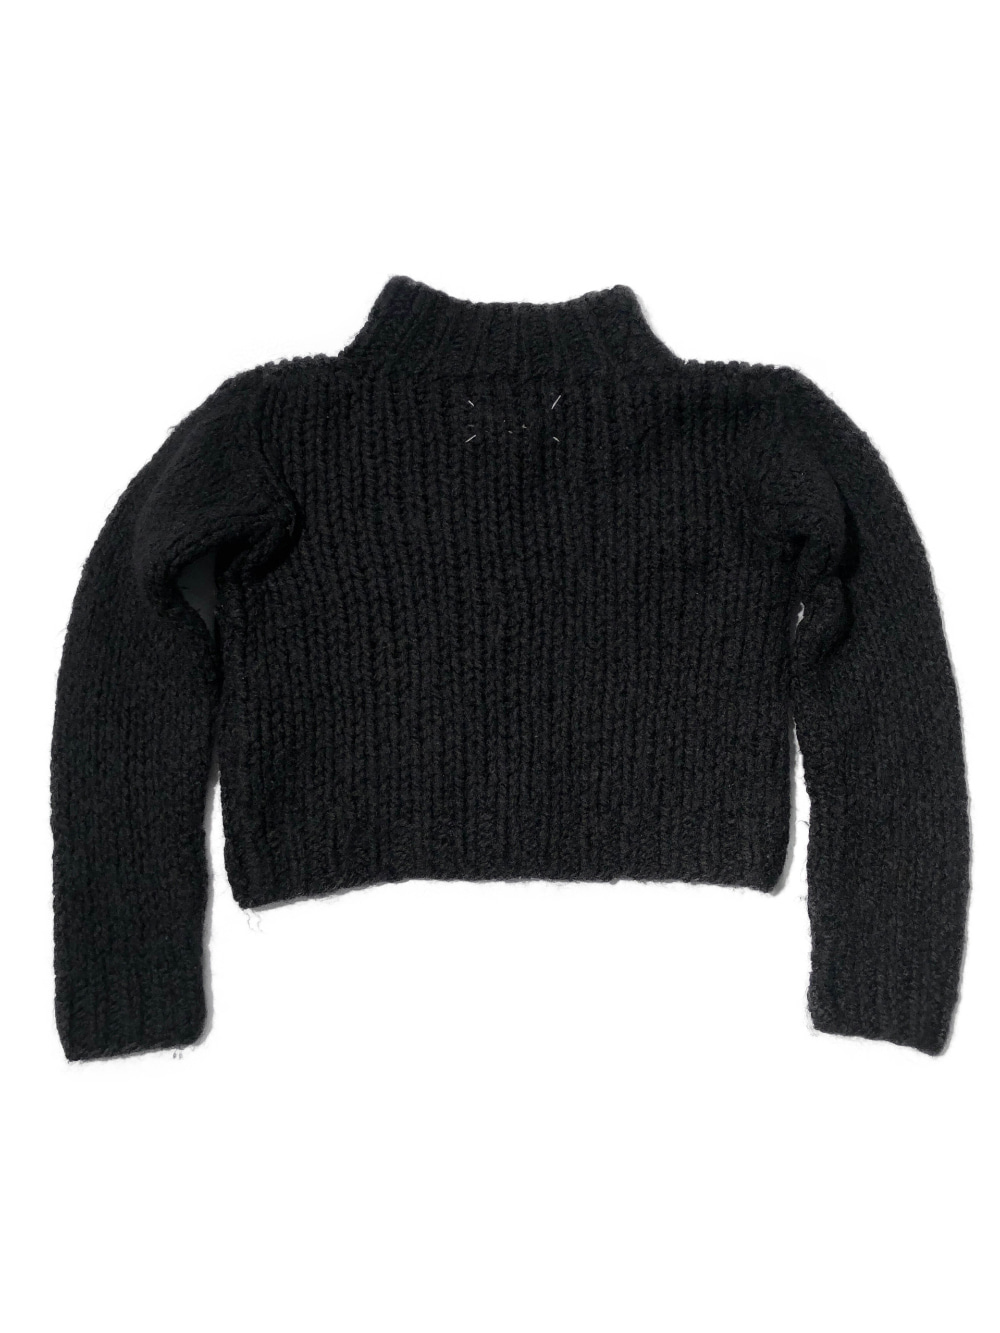 Martin Margiela 90s  cropped chunky sweater